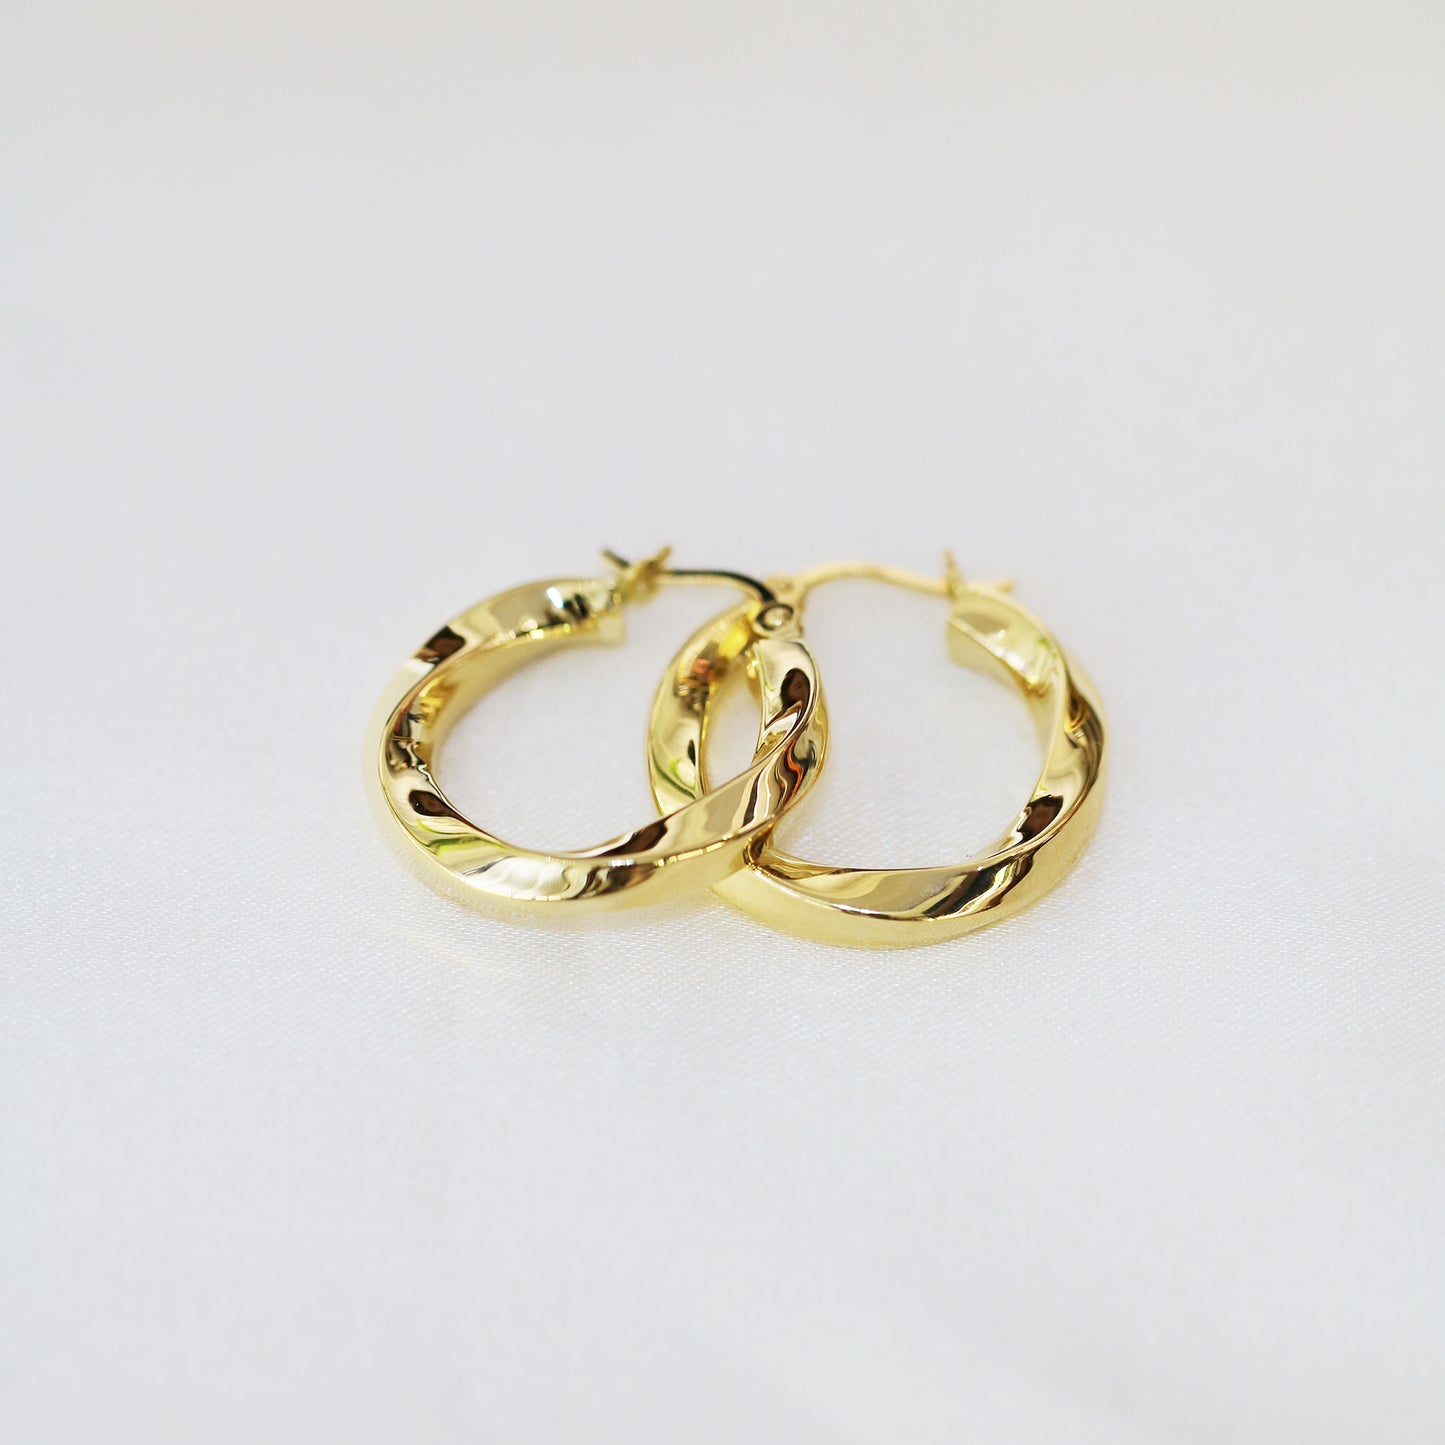 18k Yellow Gold Shiny Huggie Hoop Earrings 18K金圈形扭紋耳圈耳環 